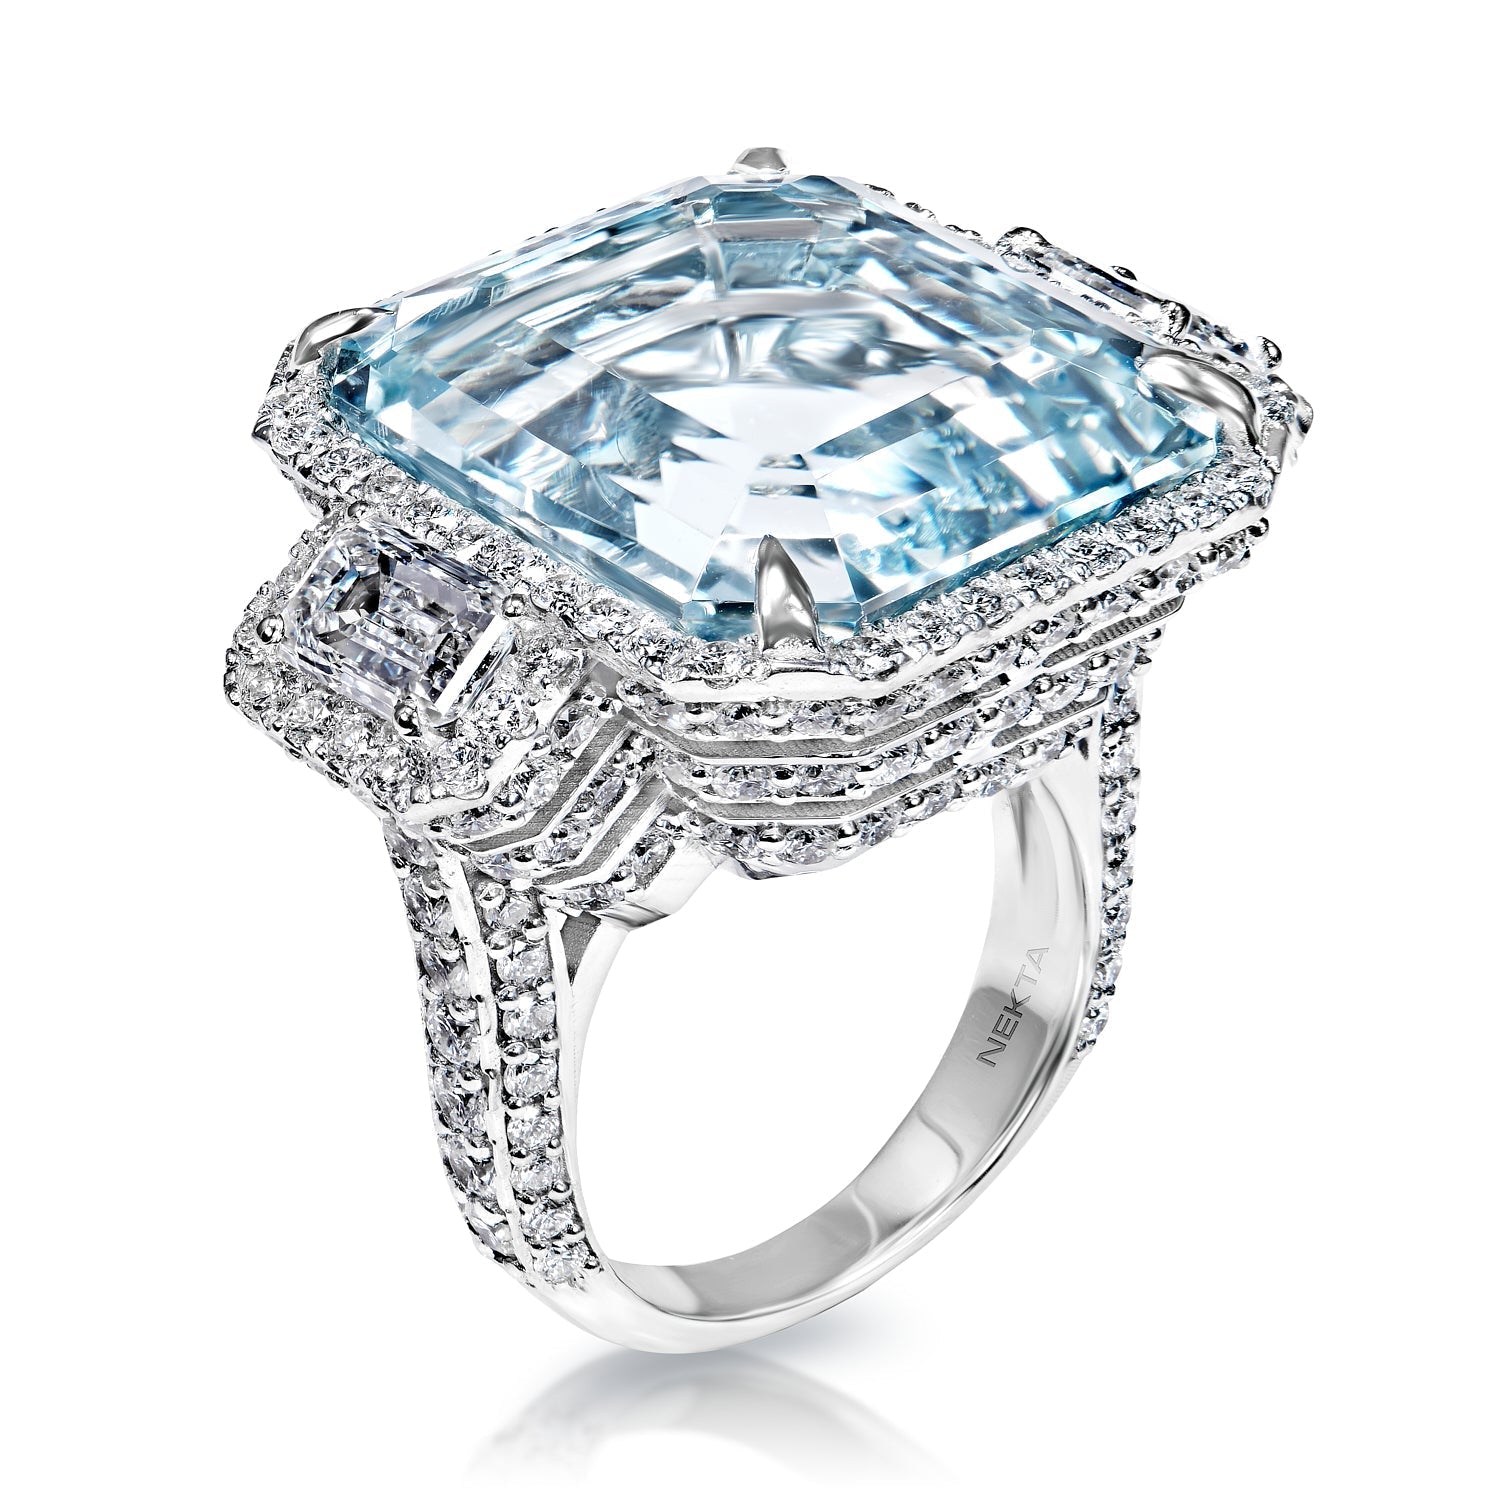 Lyndy 23 Carat AA Aquamarine Emerald Cut Lab Grown Diamond Engagement Ring in 14k White Gold Side View